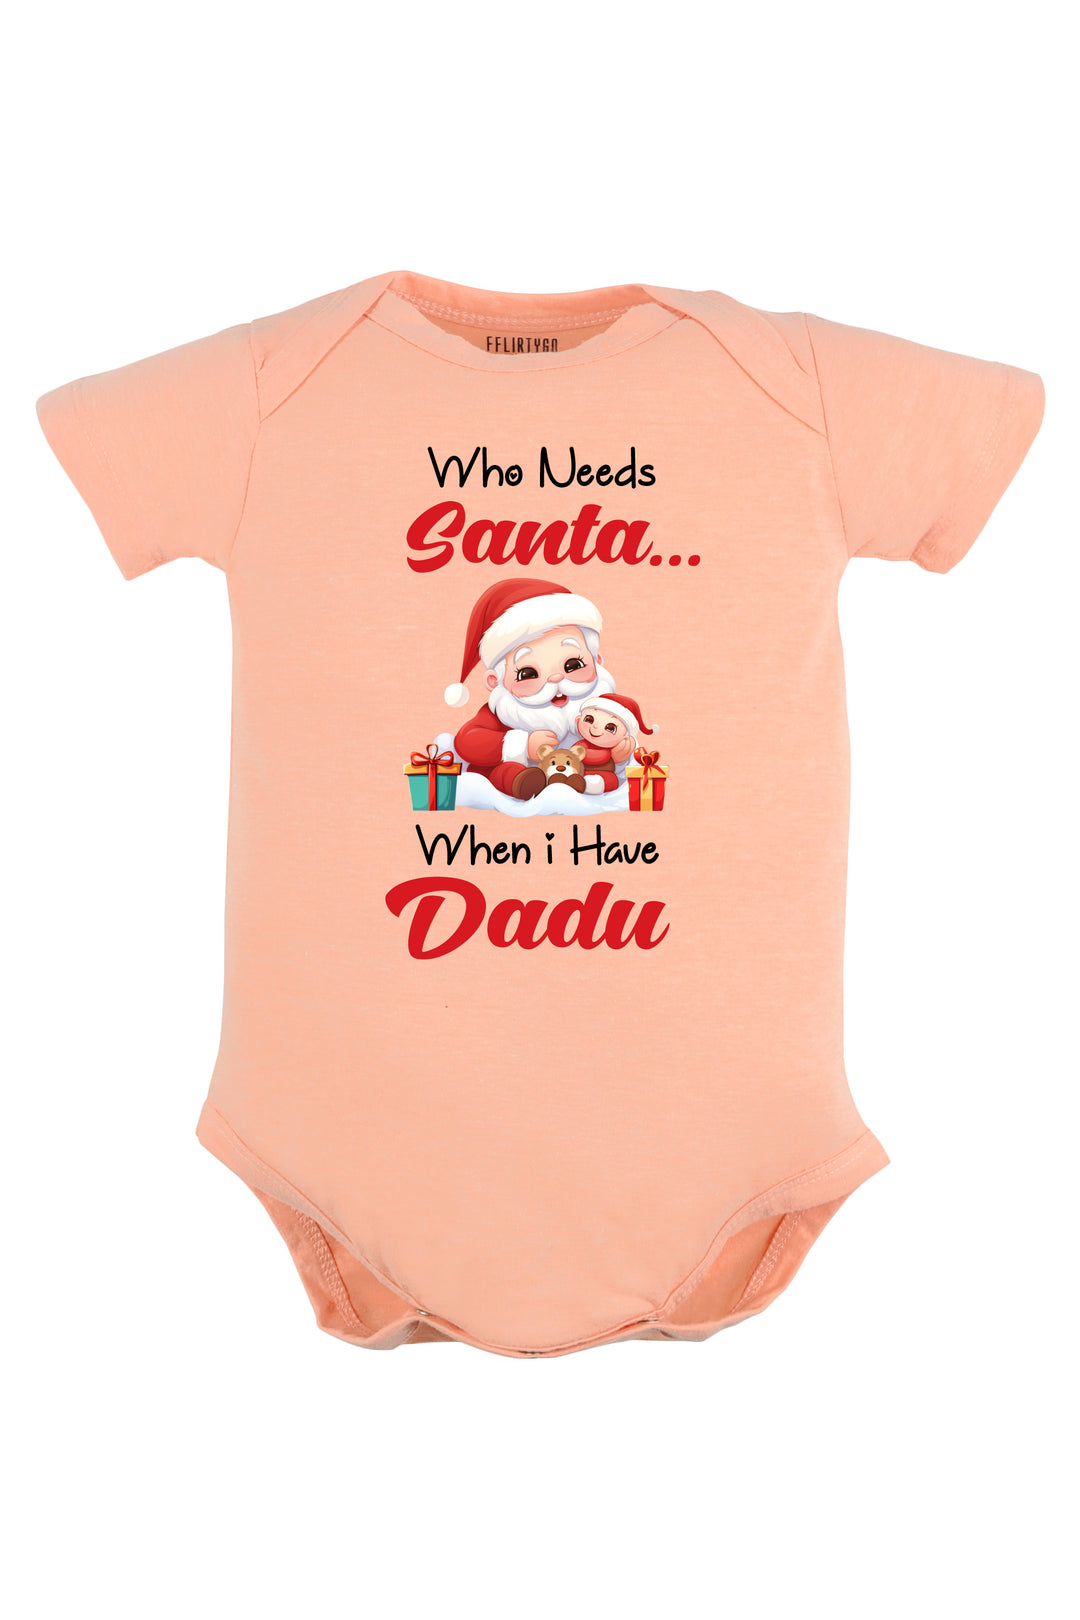 Who needs Santa When I have Dadu Baby Romper | Onesies